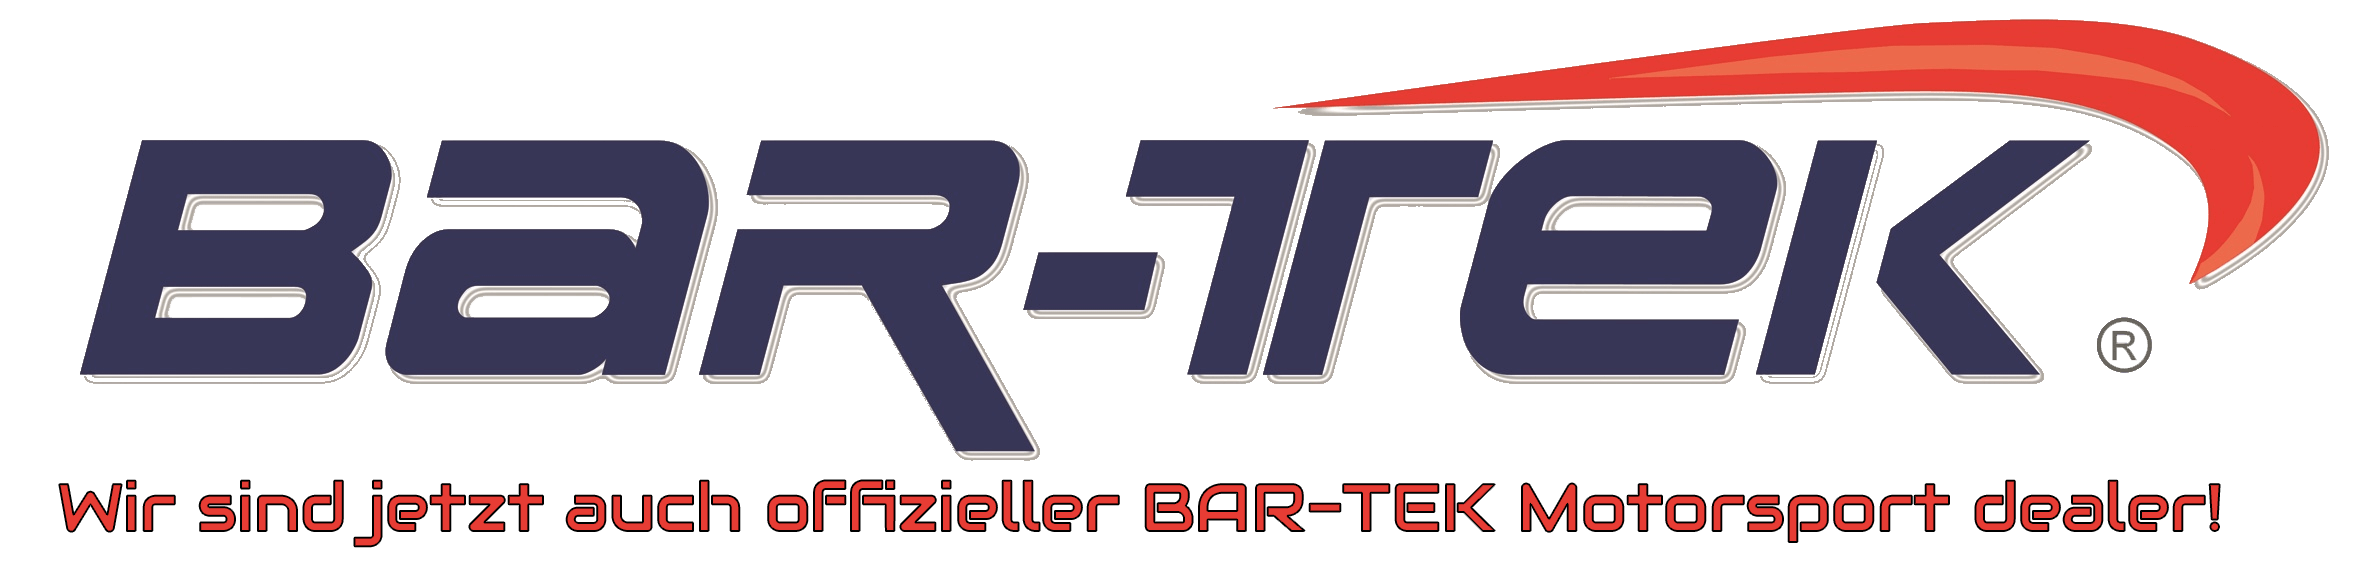 bar-tek banner